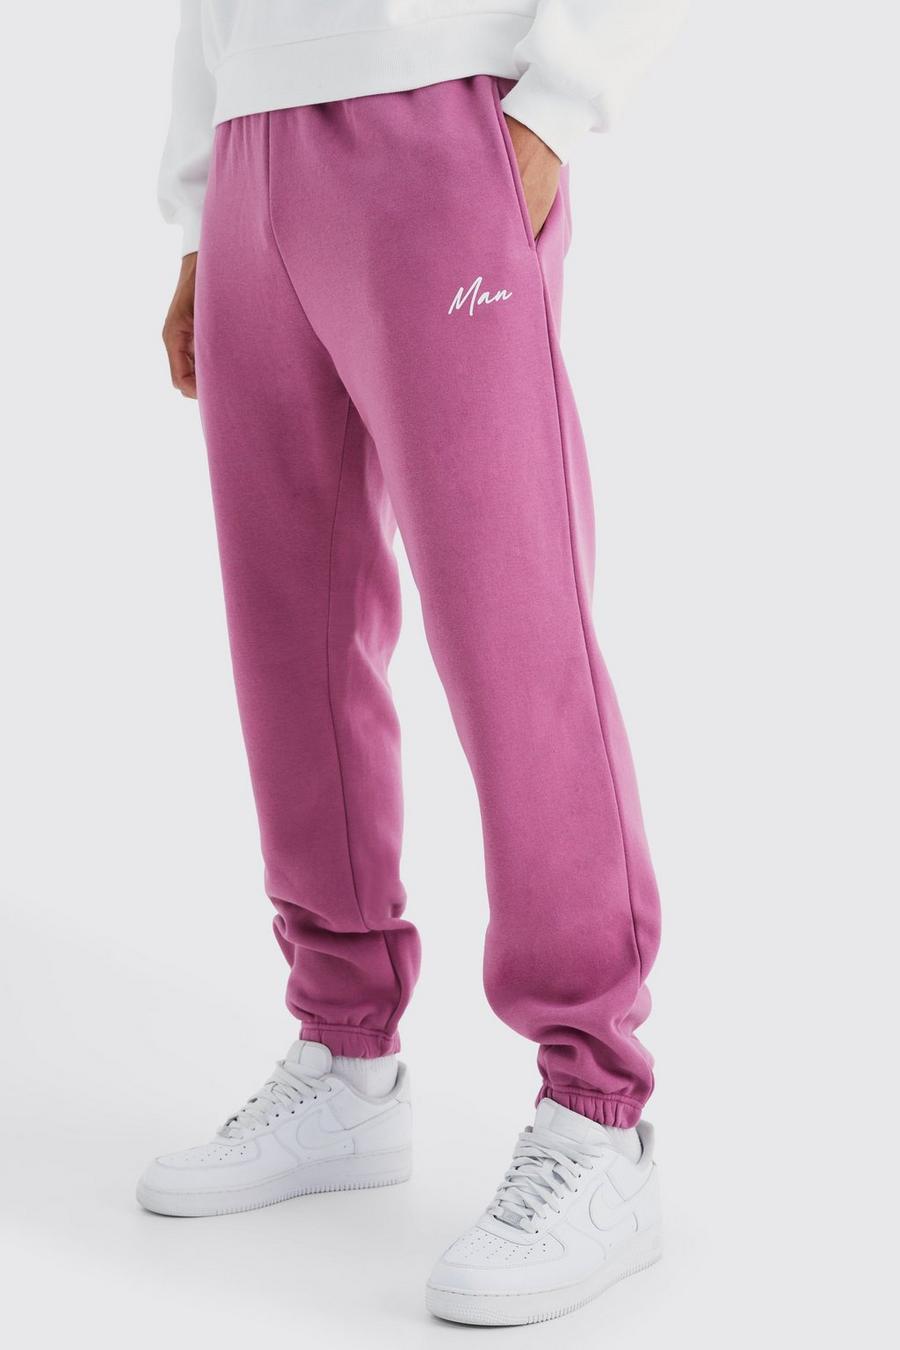 Pantalón deportivo Tall con firma MAN, Pink